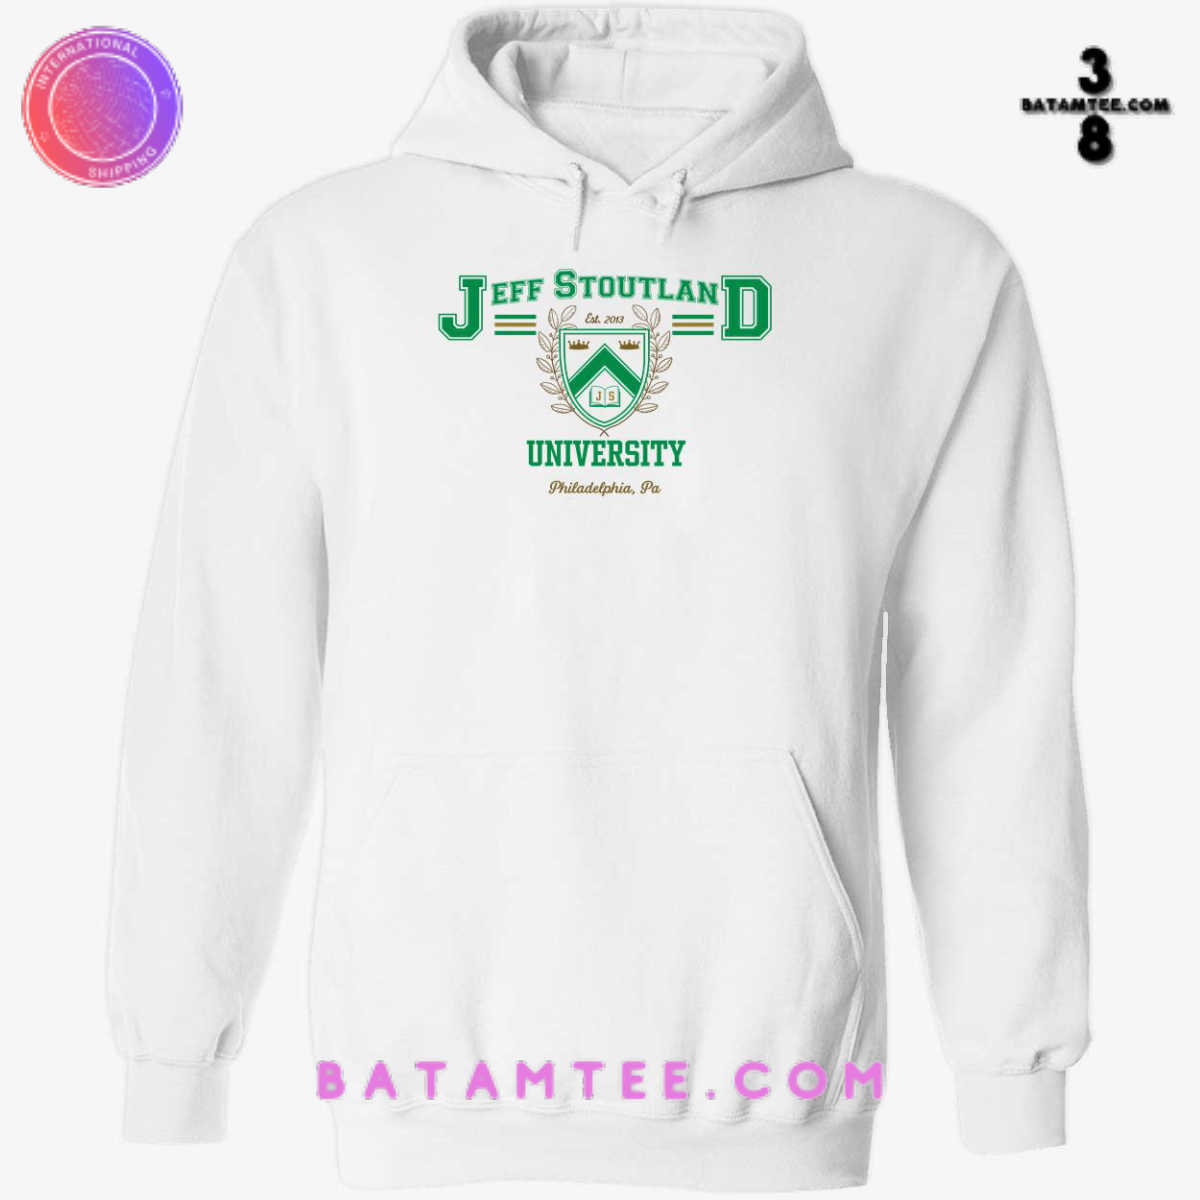 Jeff Stoutland University Hoodie, T-Shirt, Sweatshirt